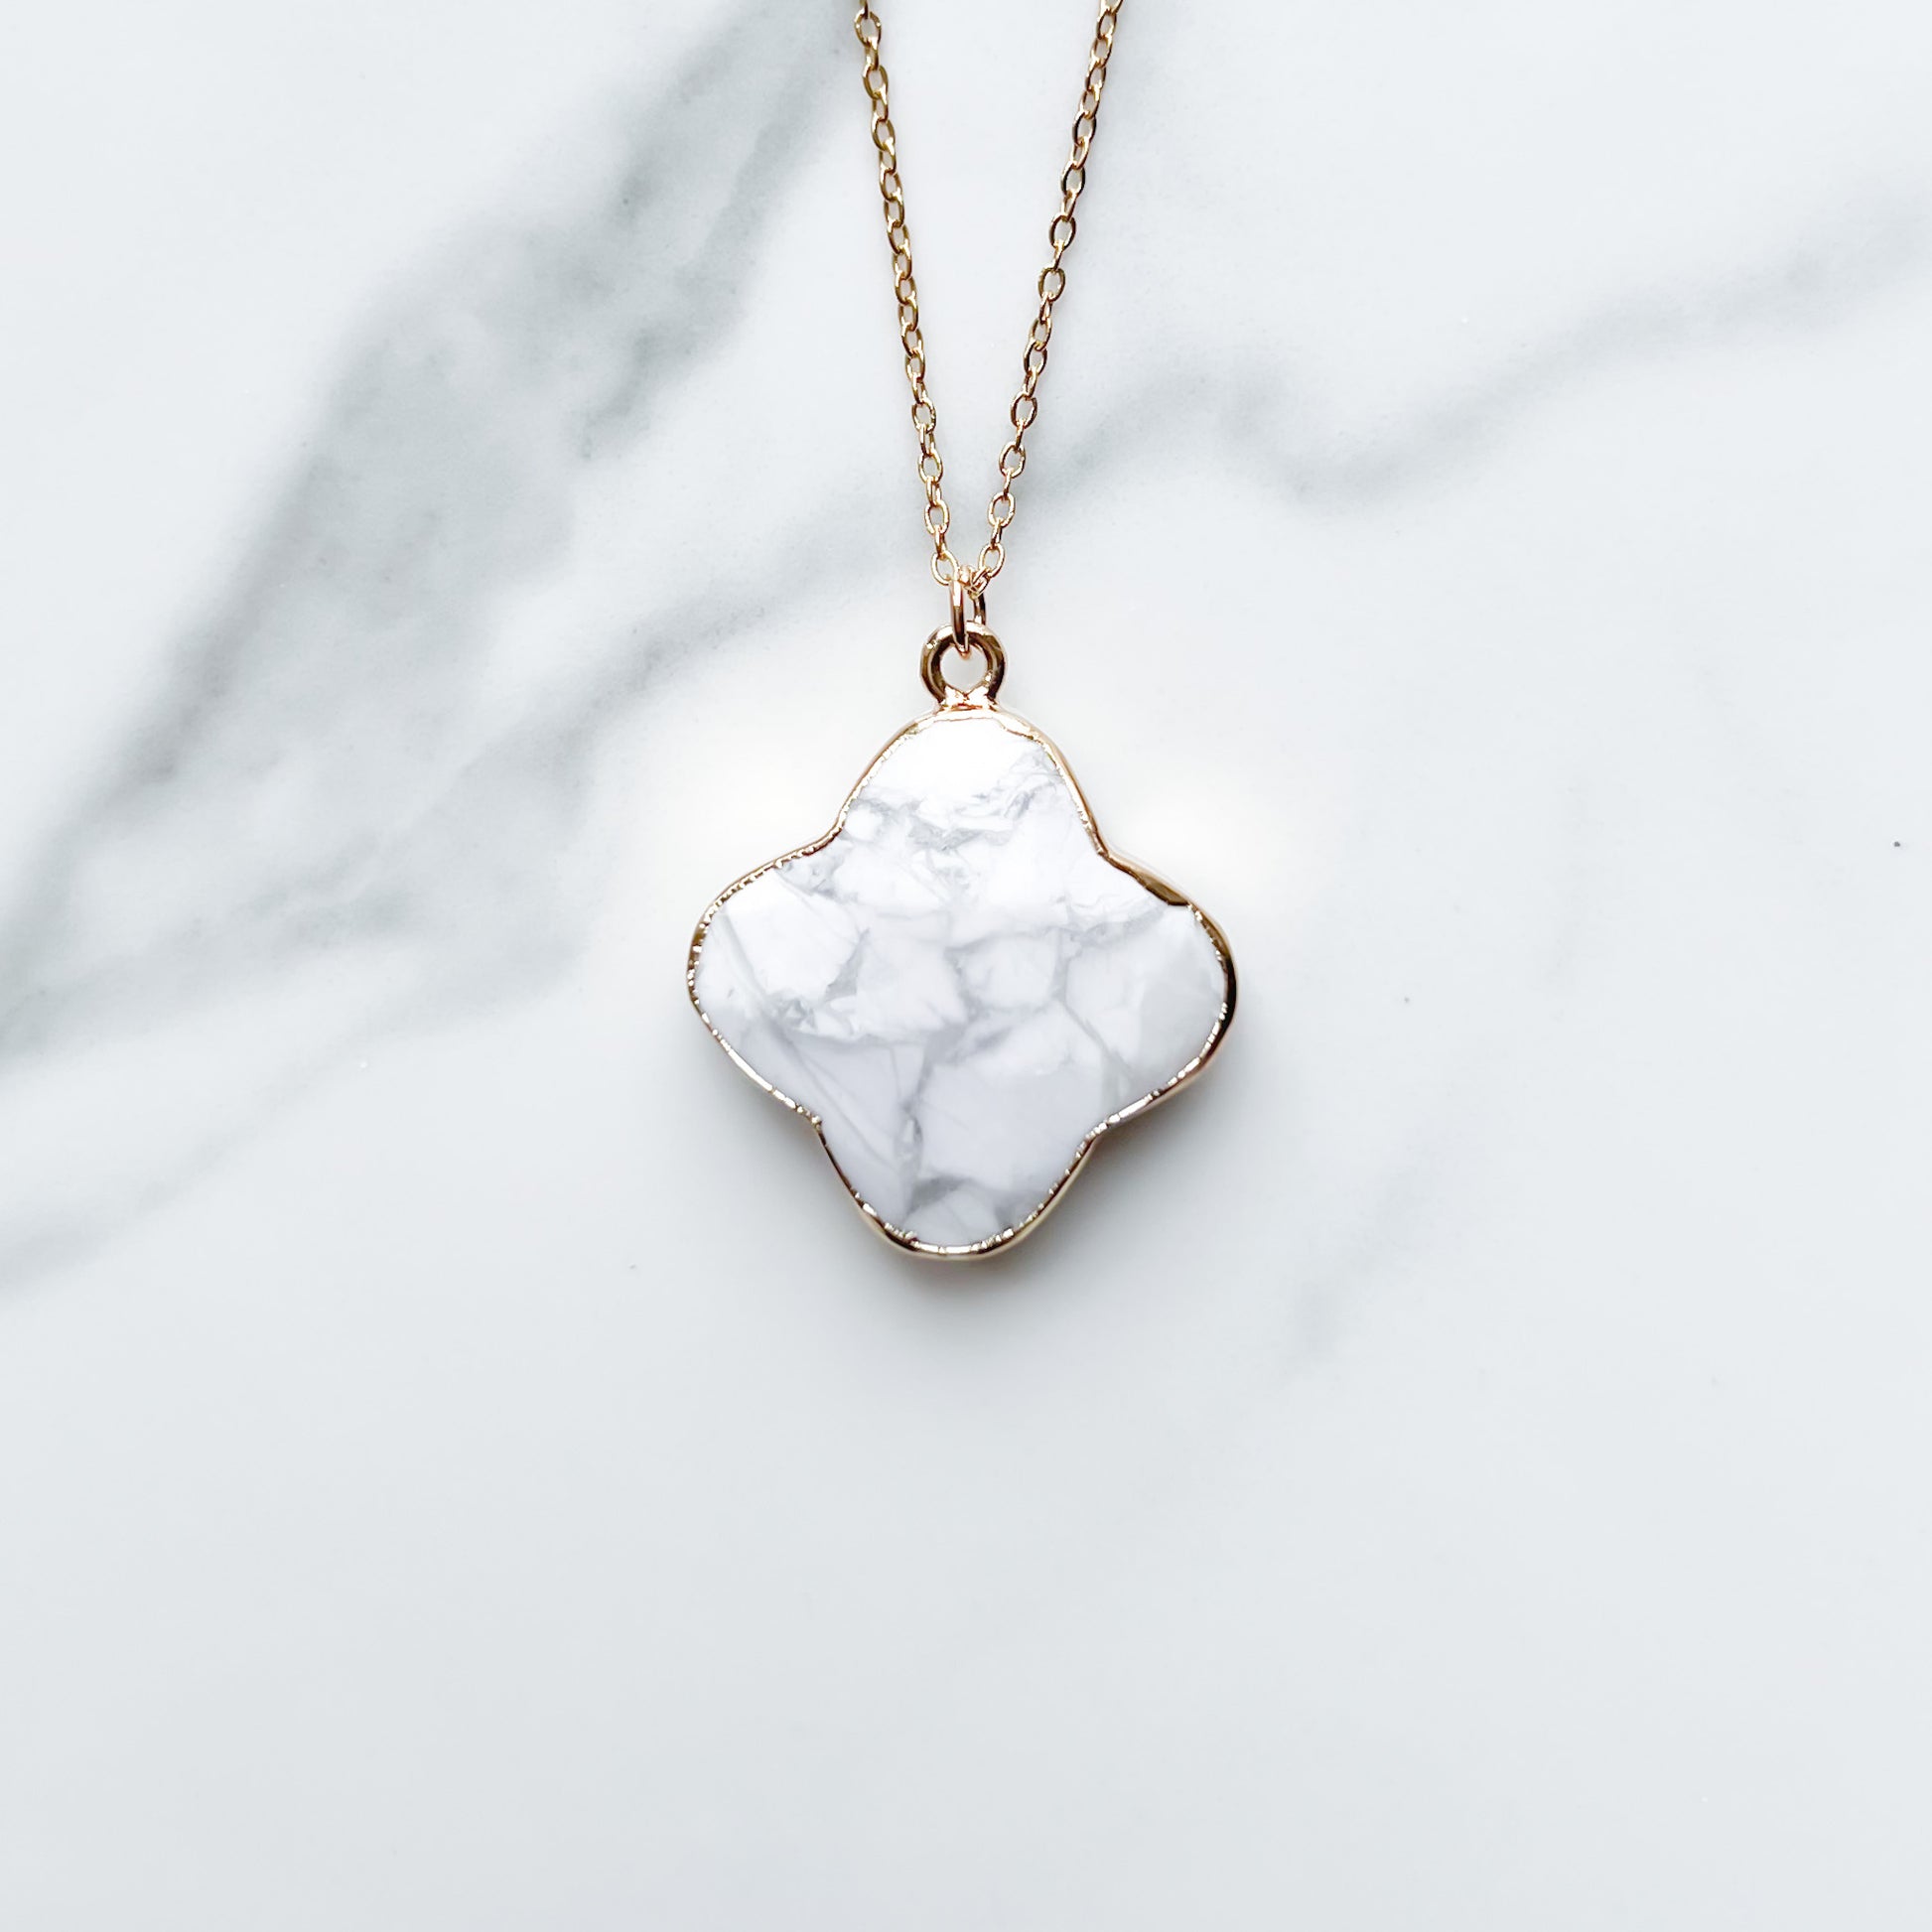 Semi precious healing gemstone clover shaped pendant necklace in howlite